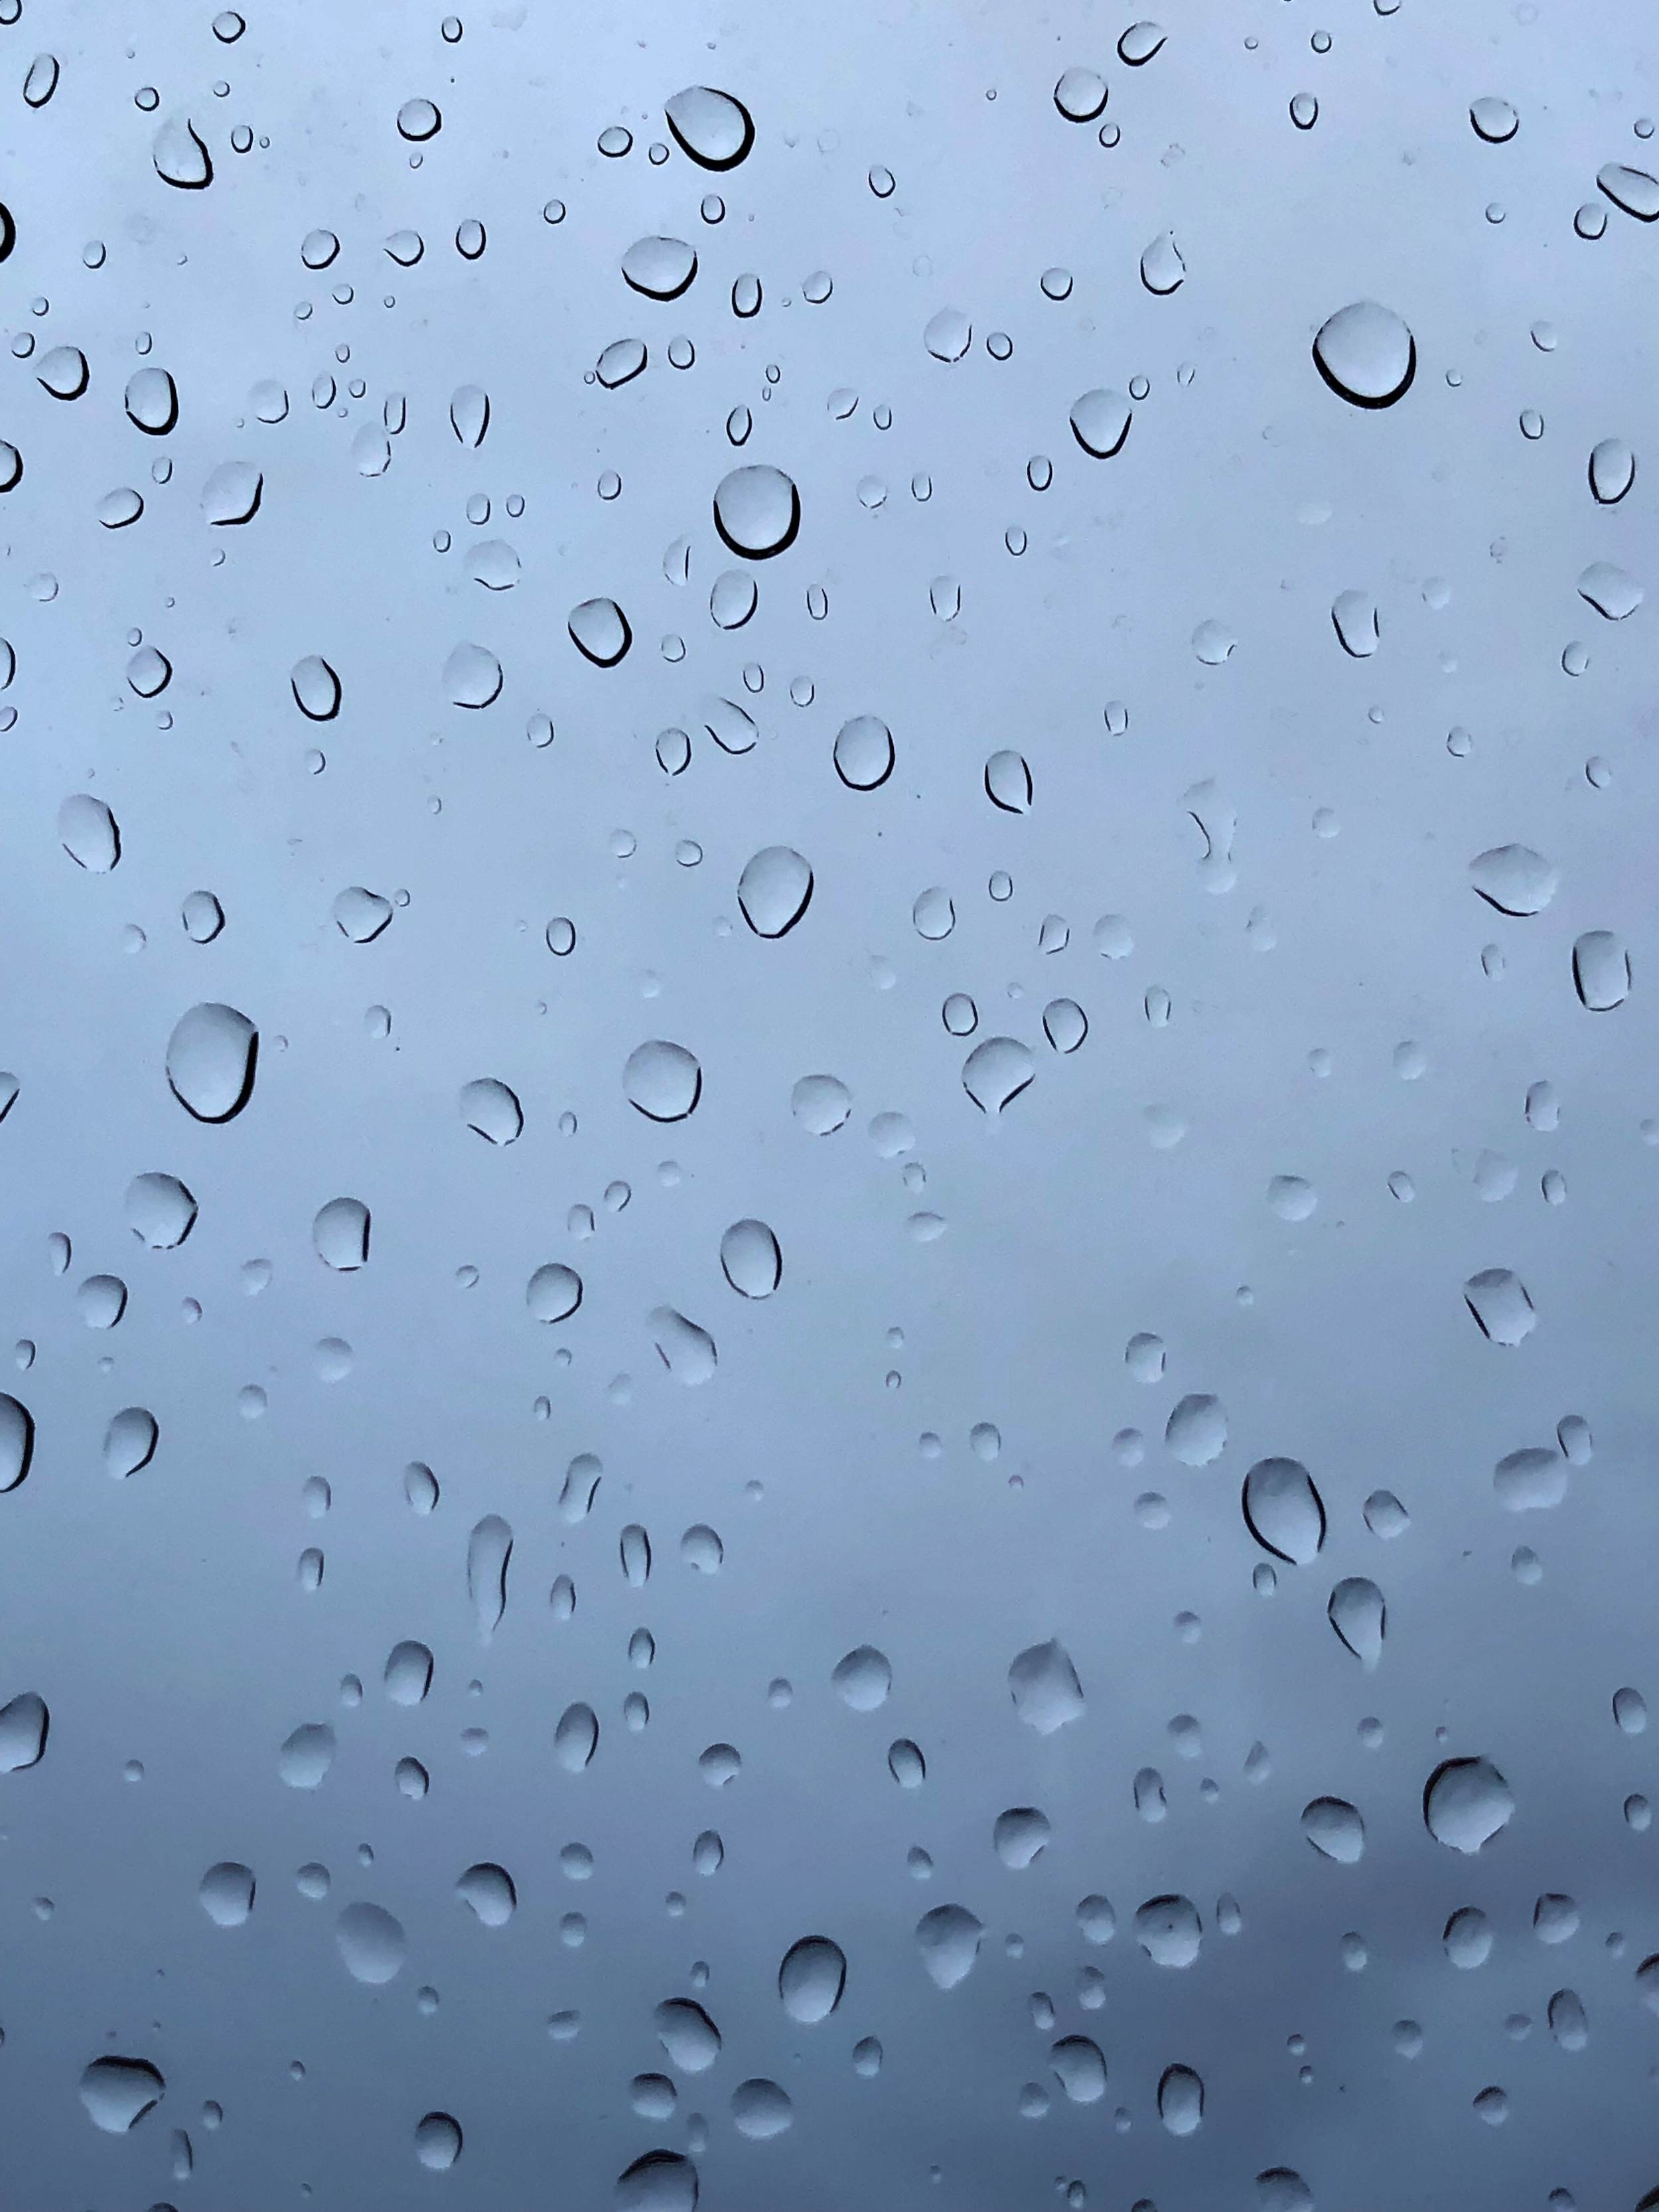 Enjoy a Beautiful Water Droplets Wallpaper | OSXDaily